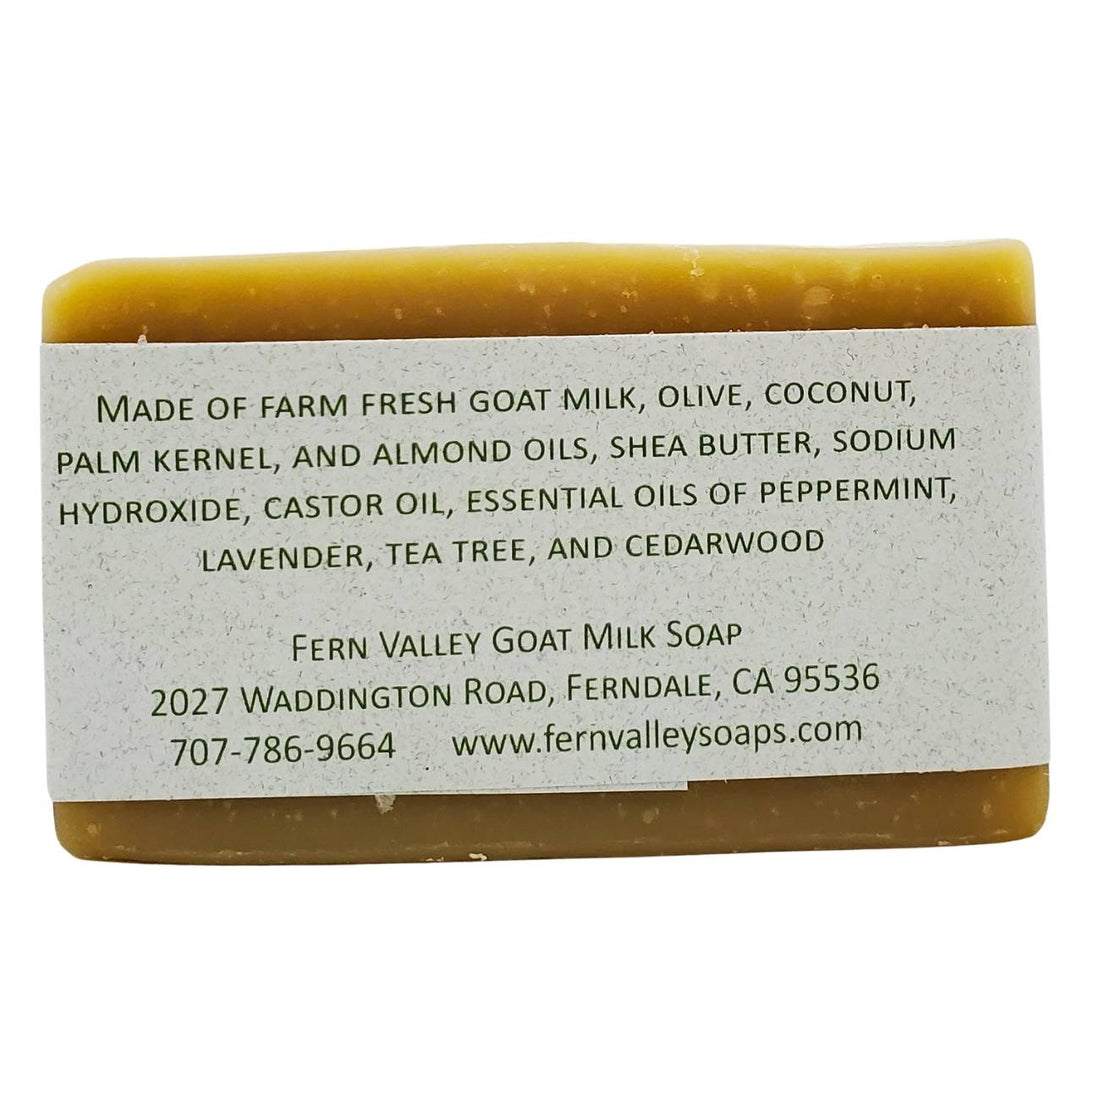 Handmade Goat Milk Soap | Tea Tree Oil Soap | Humbug